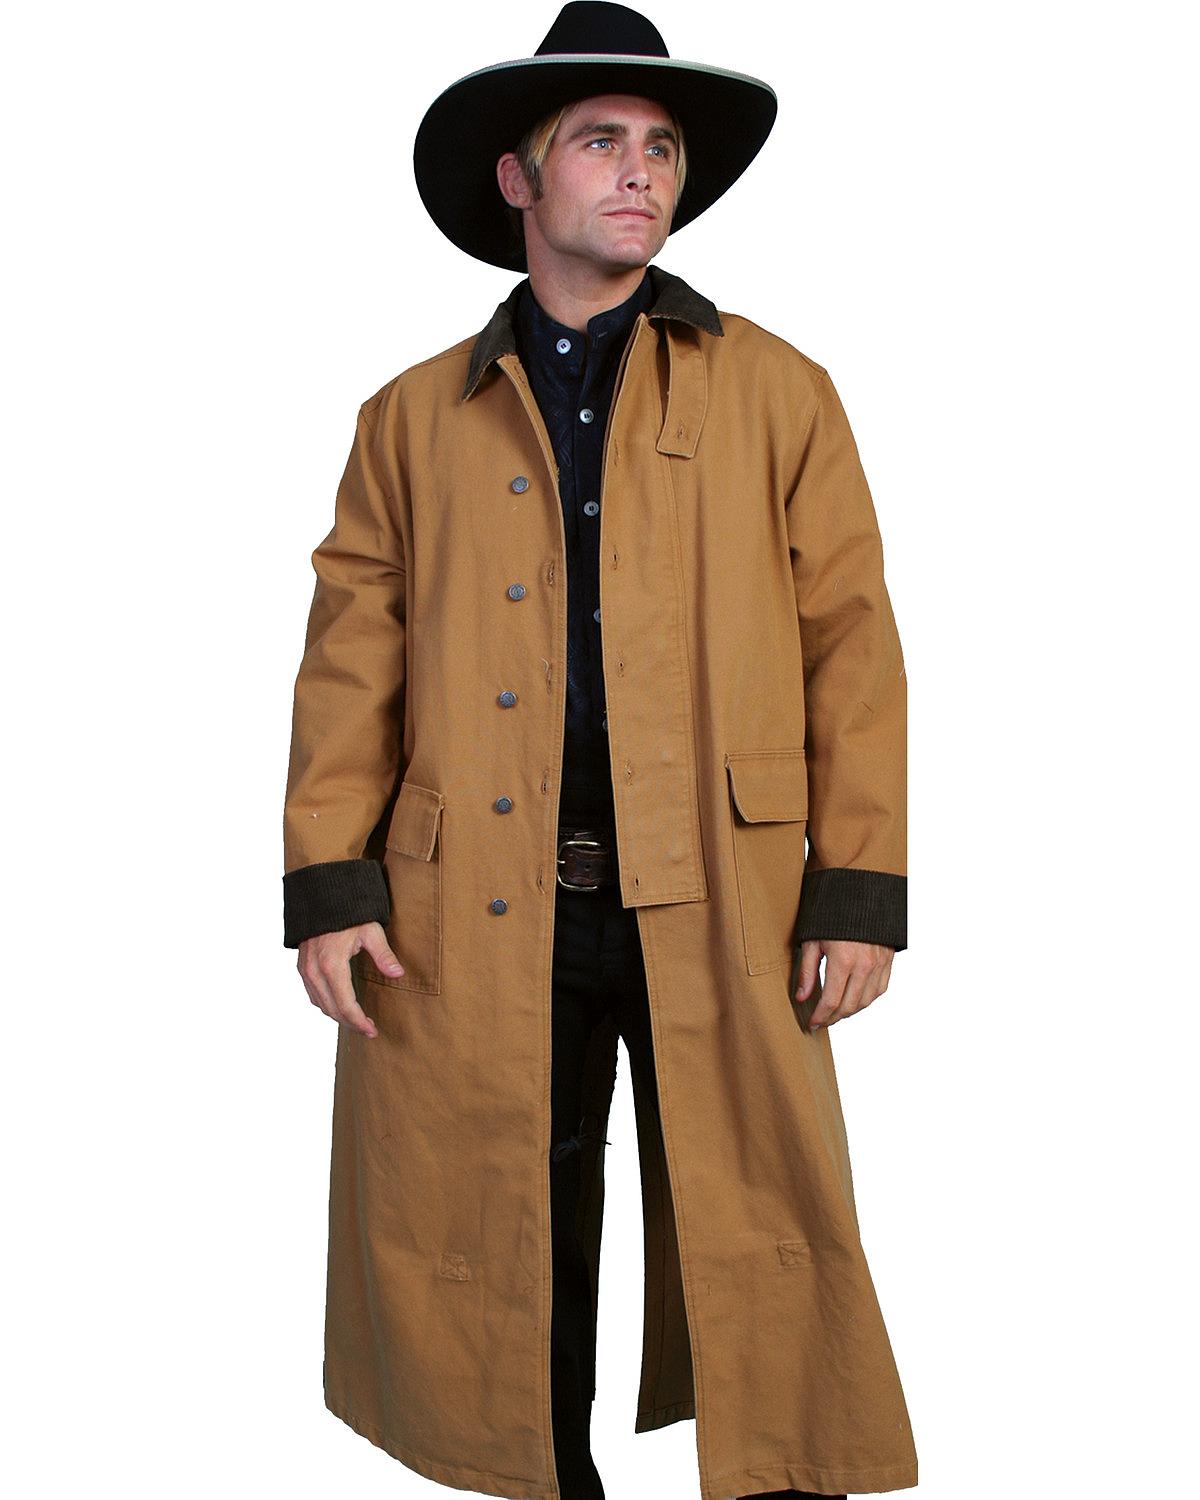 Western Coat Rainproof Leather Cowboy Country Duster Like Oilskinmantel New Sale 